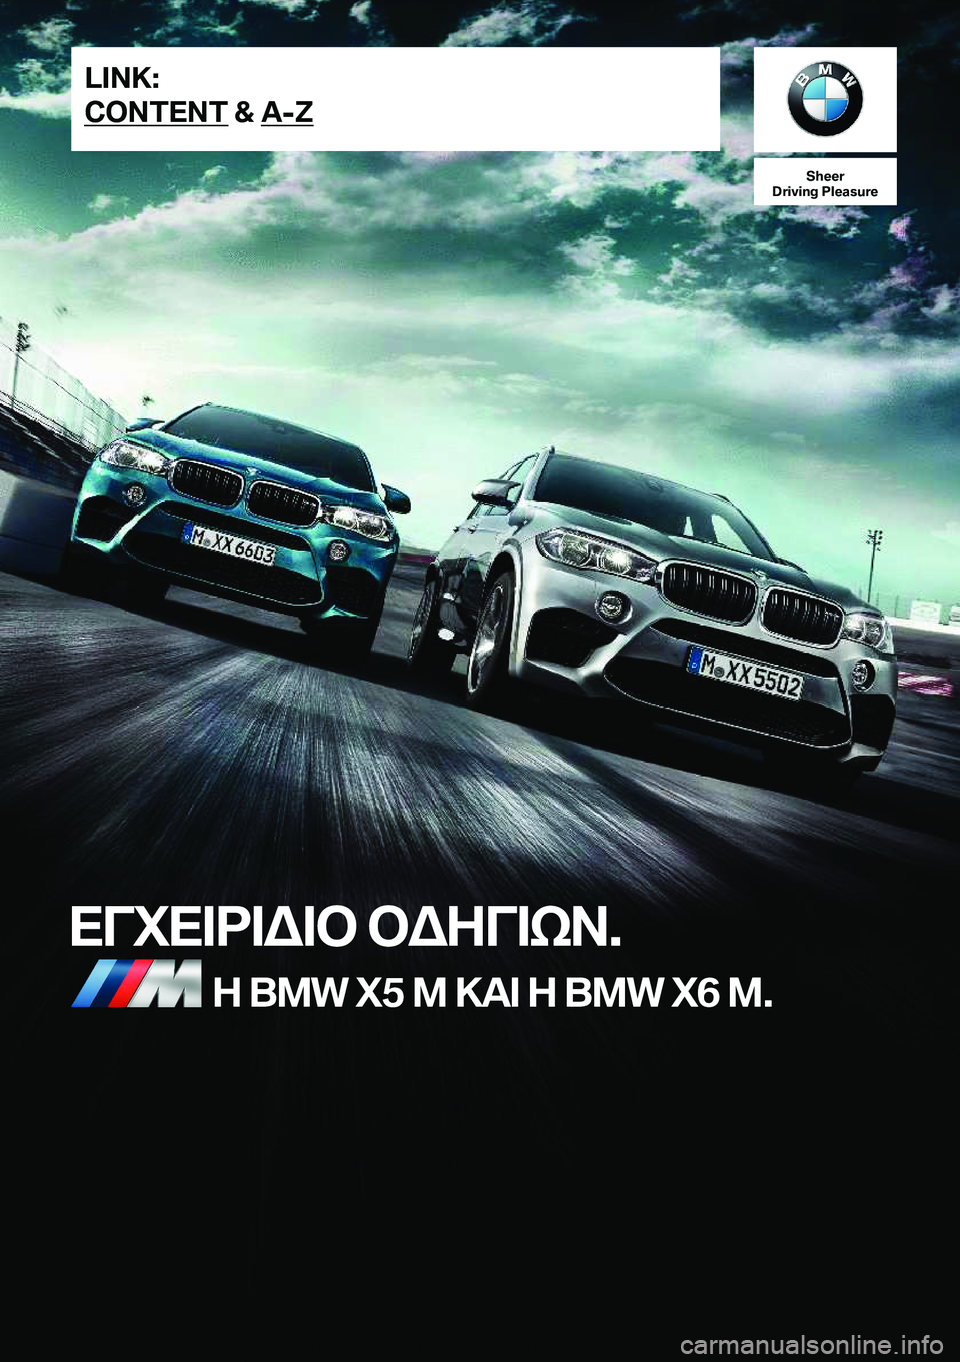 BMW X6 M 2019  ΟΔΗΓΌΣ ΧΡΉΣΗΣ (in Greek) �S�h�e�e�r
�D�r�i�v�i�n�g��P�l�e�a�s�u�r�e
XViX=d=W=b�bWZV=kA�.Z��B�M�W��X�5��M�>T=�Z��B�M�W��X�6��M�.�L�I�N�K�:
�C�O�N�T�E�N�T��&��A�-�Z�O�n�l�i�n�e��E�d�i�t�i�o�n�